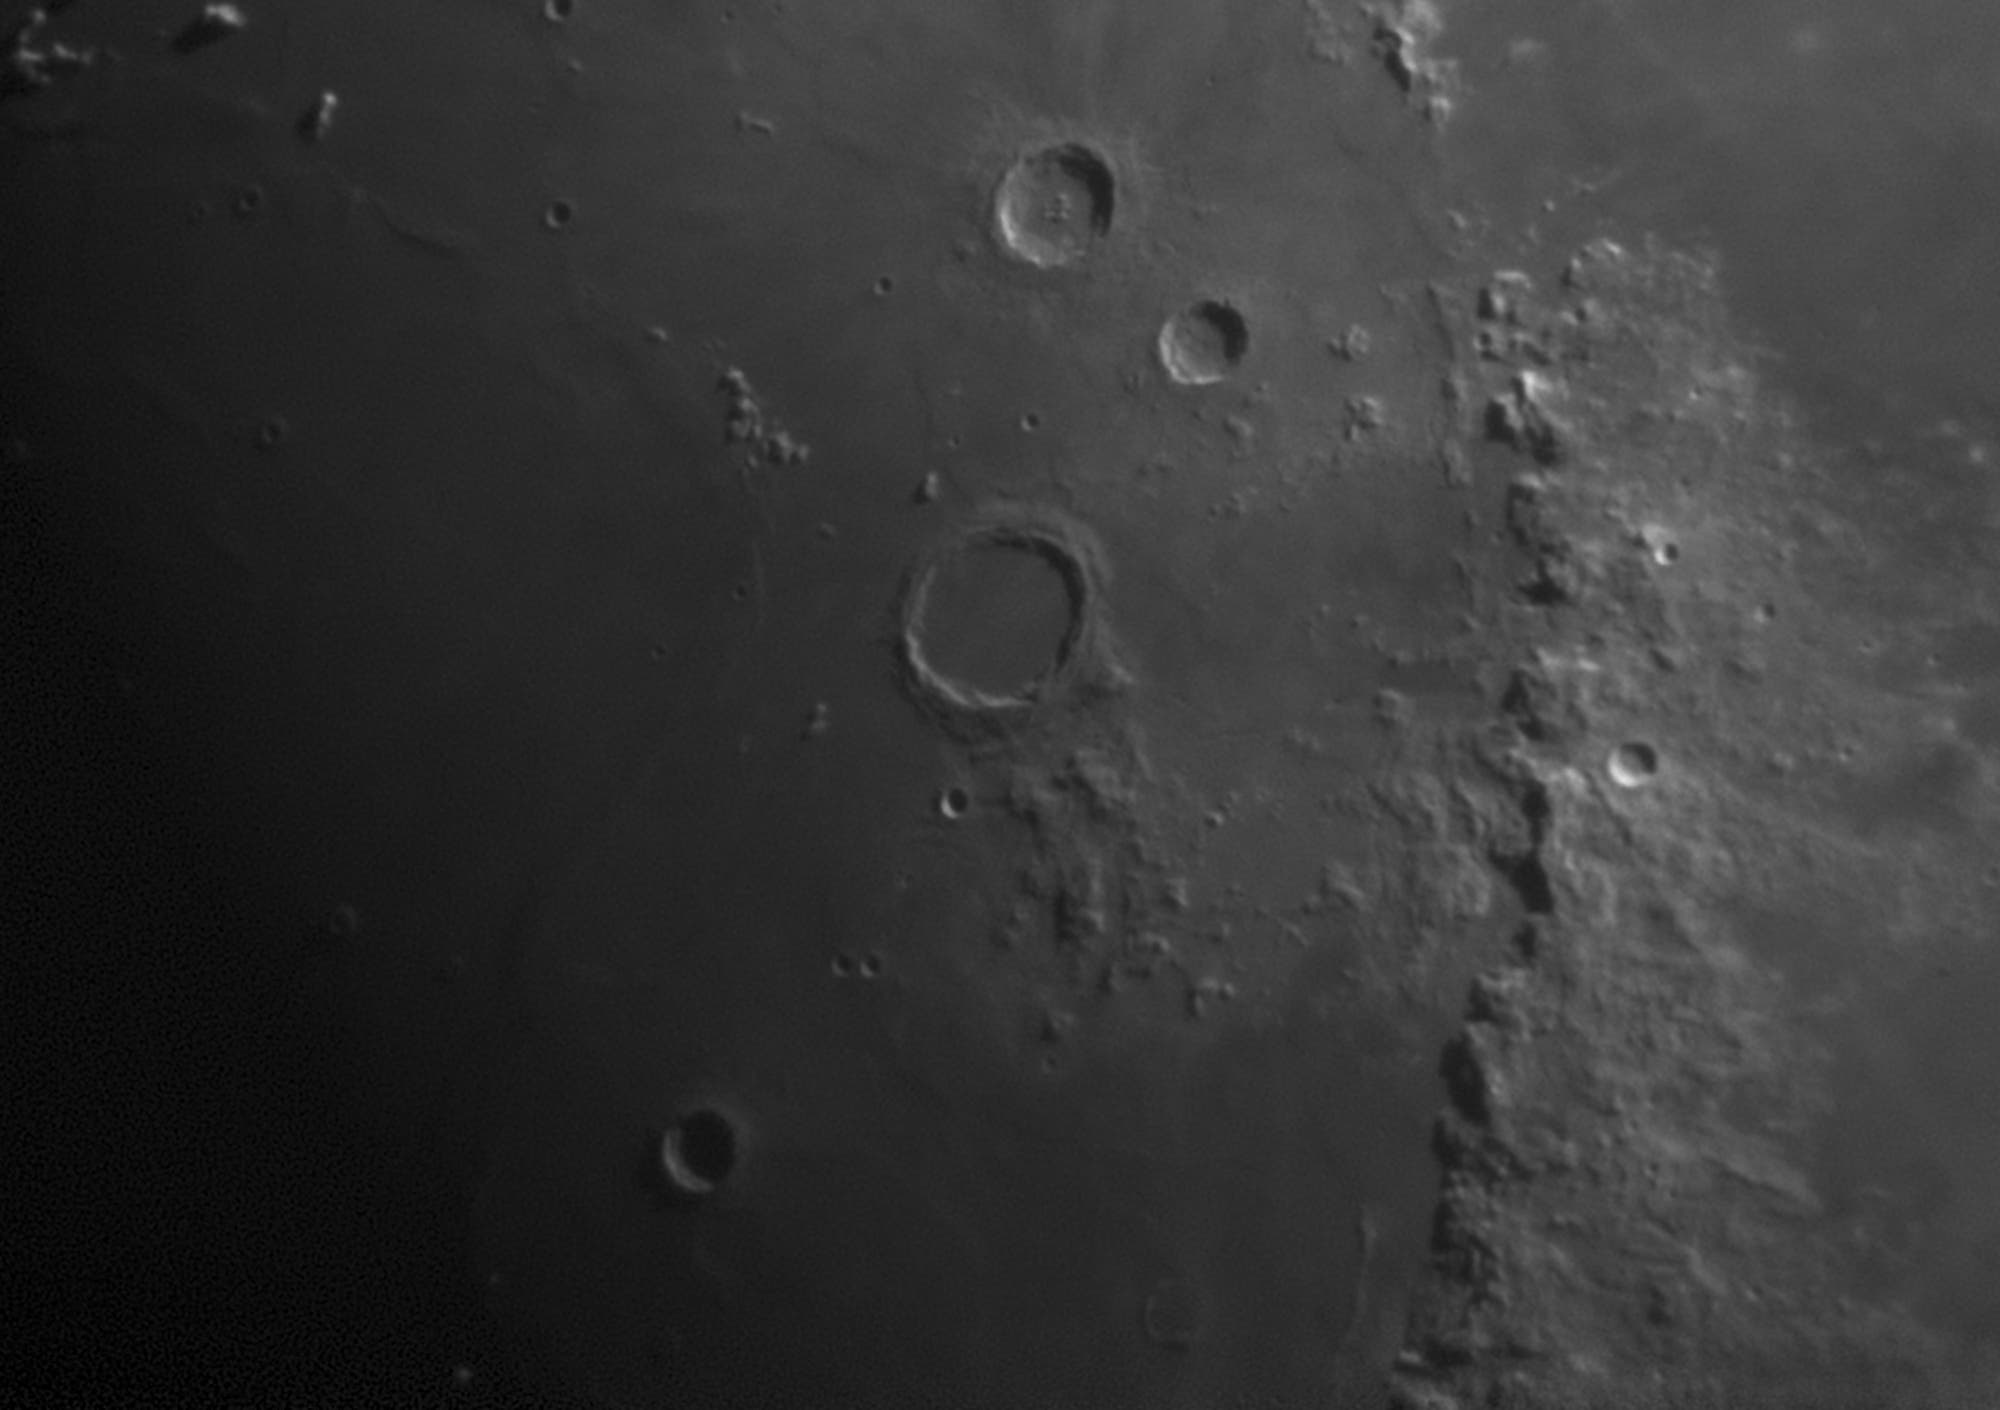 Krater Archimedes